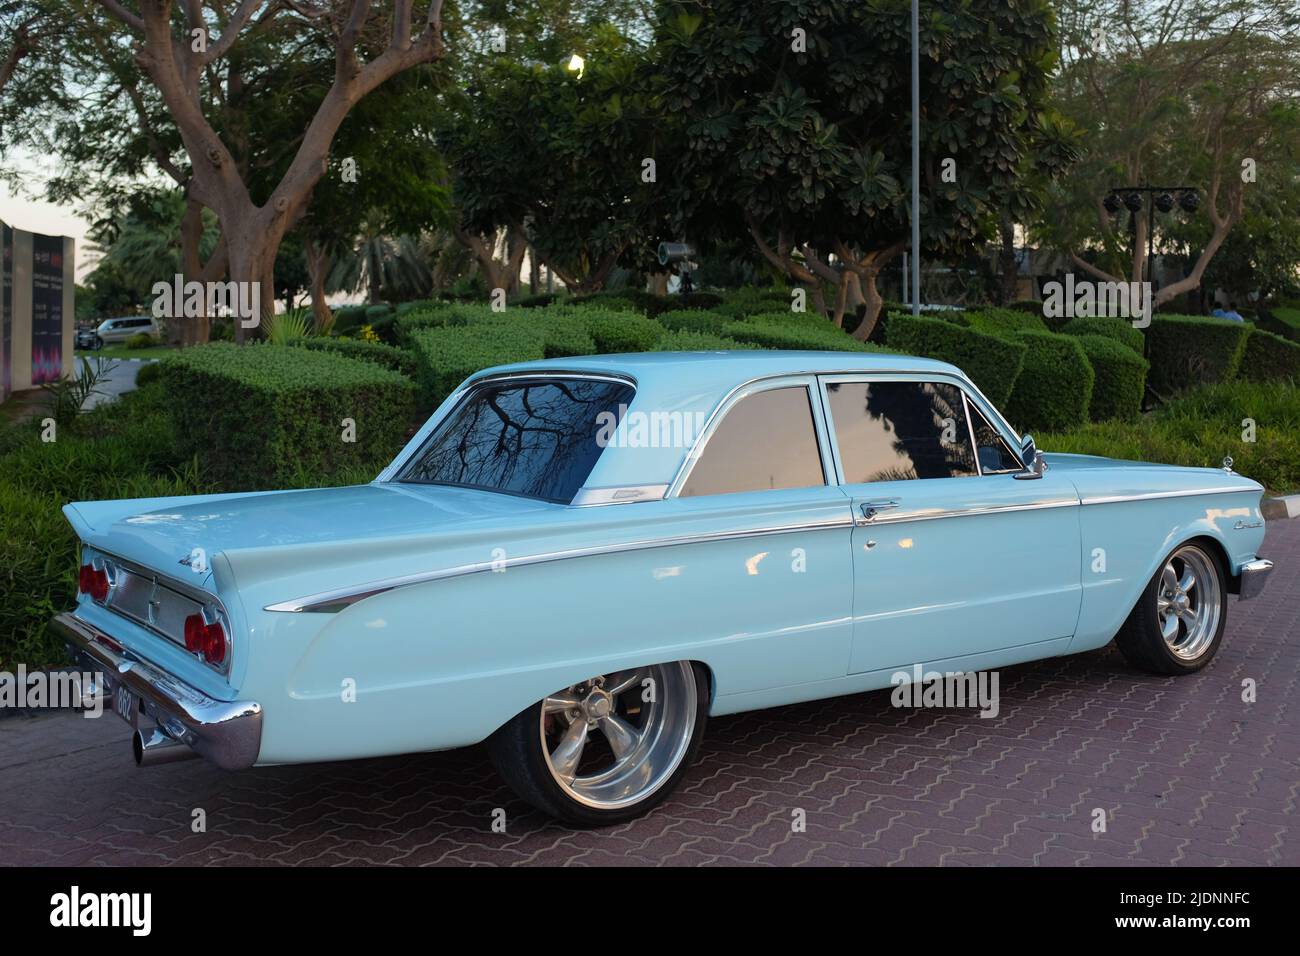 Dubai, United Arab Emirates - March 26, 2016: light blue antique Ford Mercury Comet parked in Emirates Golf Club. Stock Photo